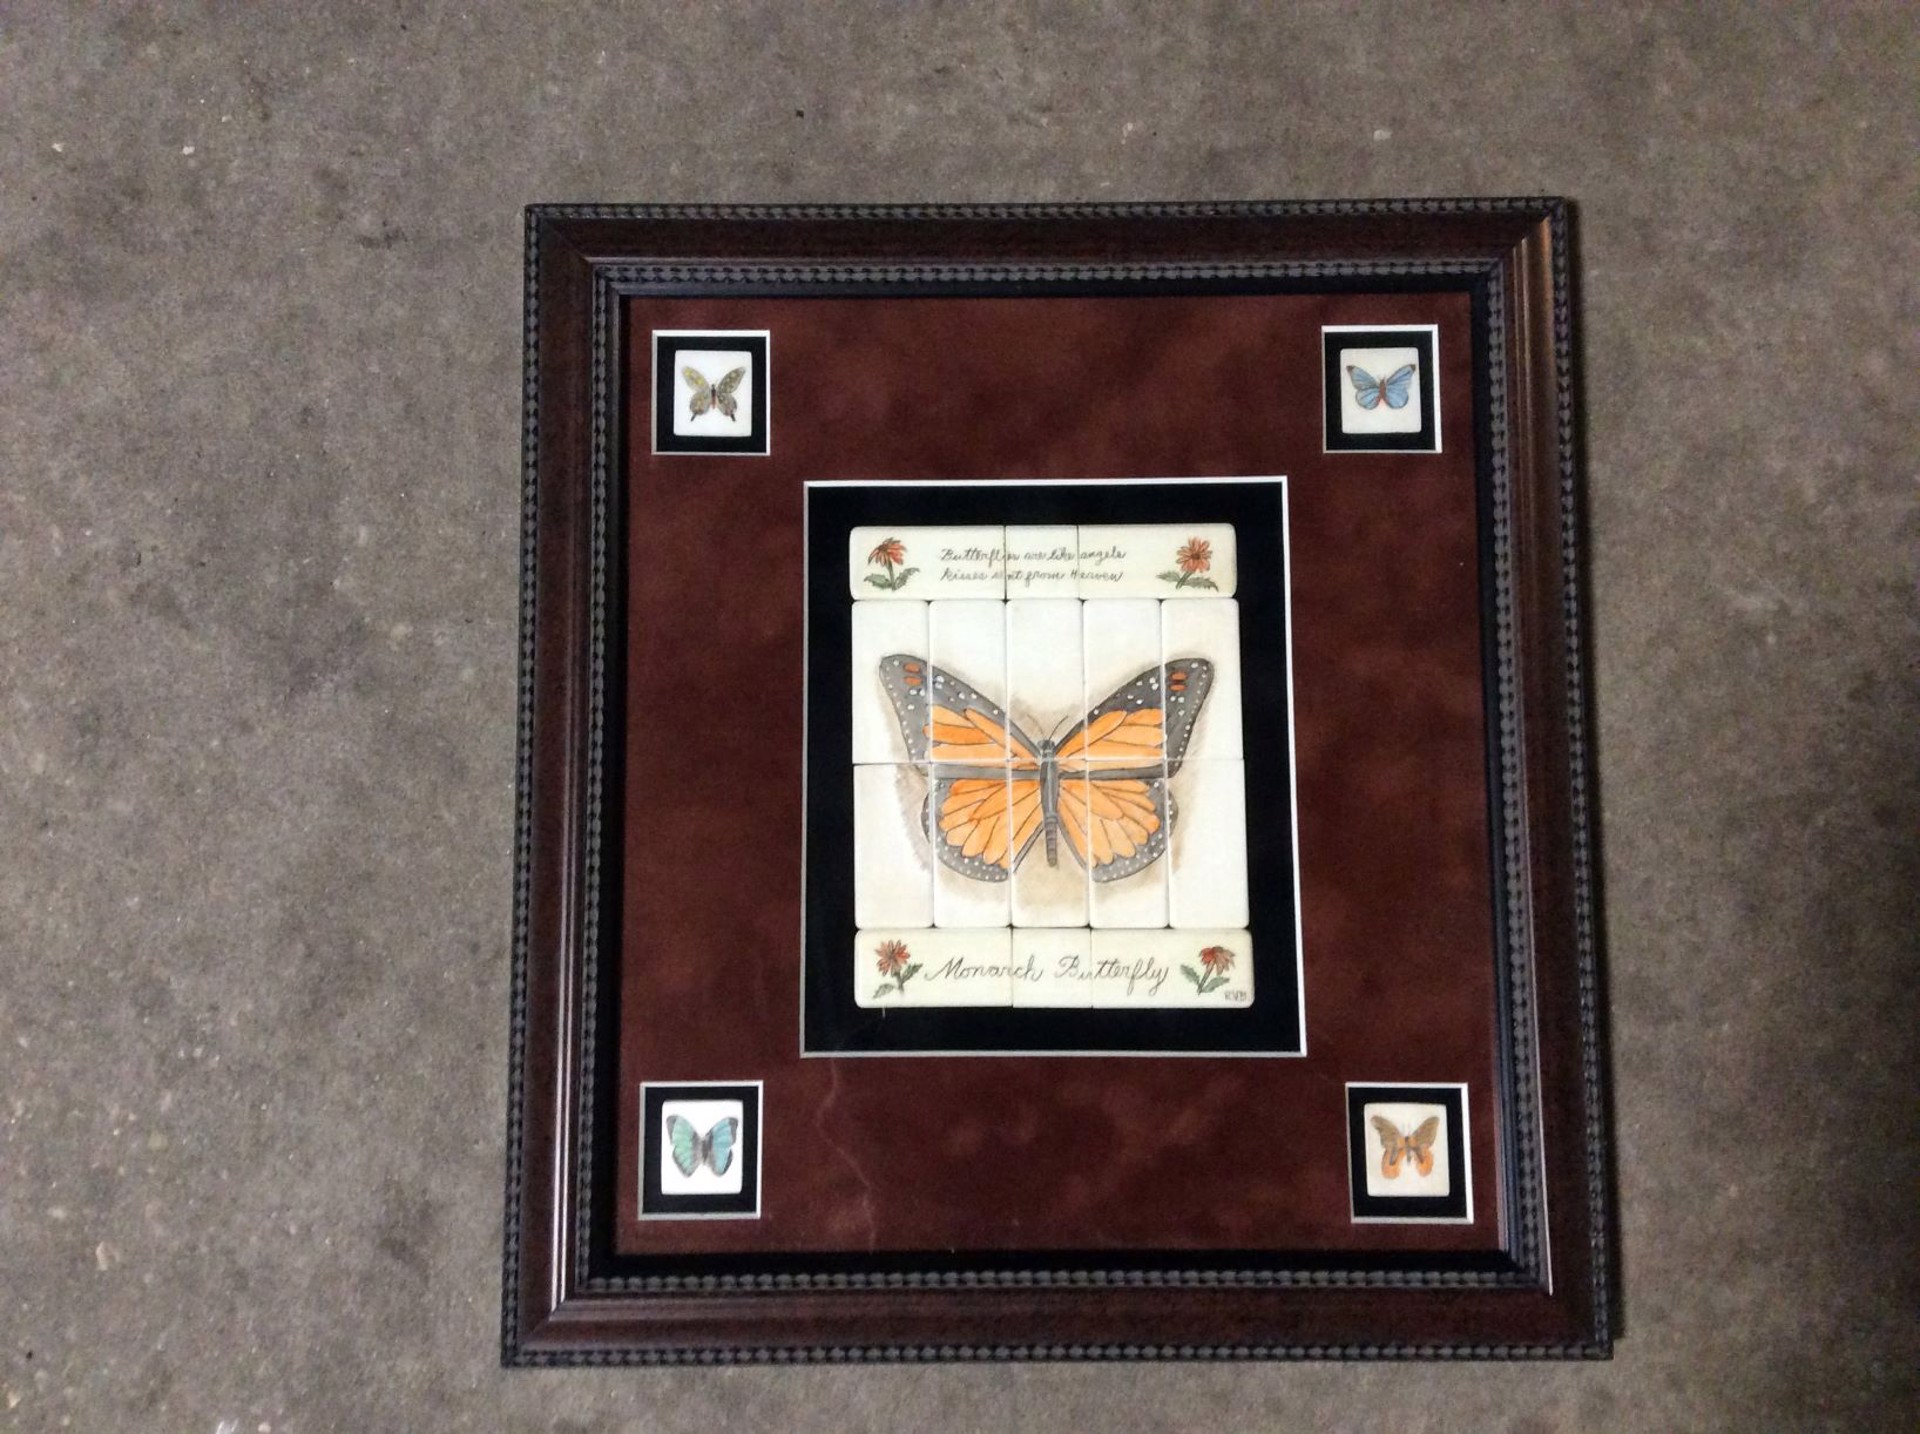 Monarch Butterfly (4822) by Roger Van Boxtel